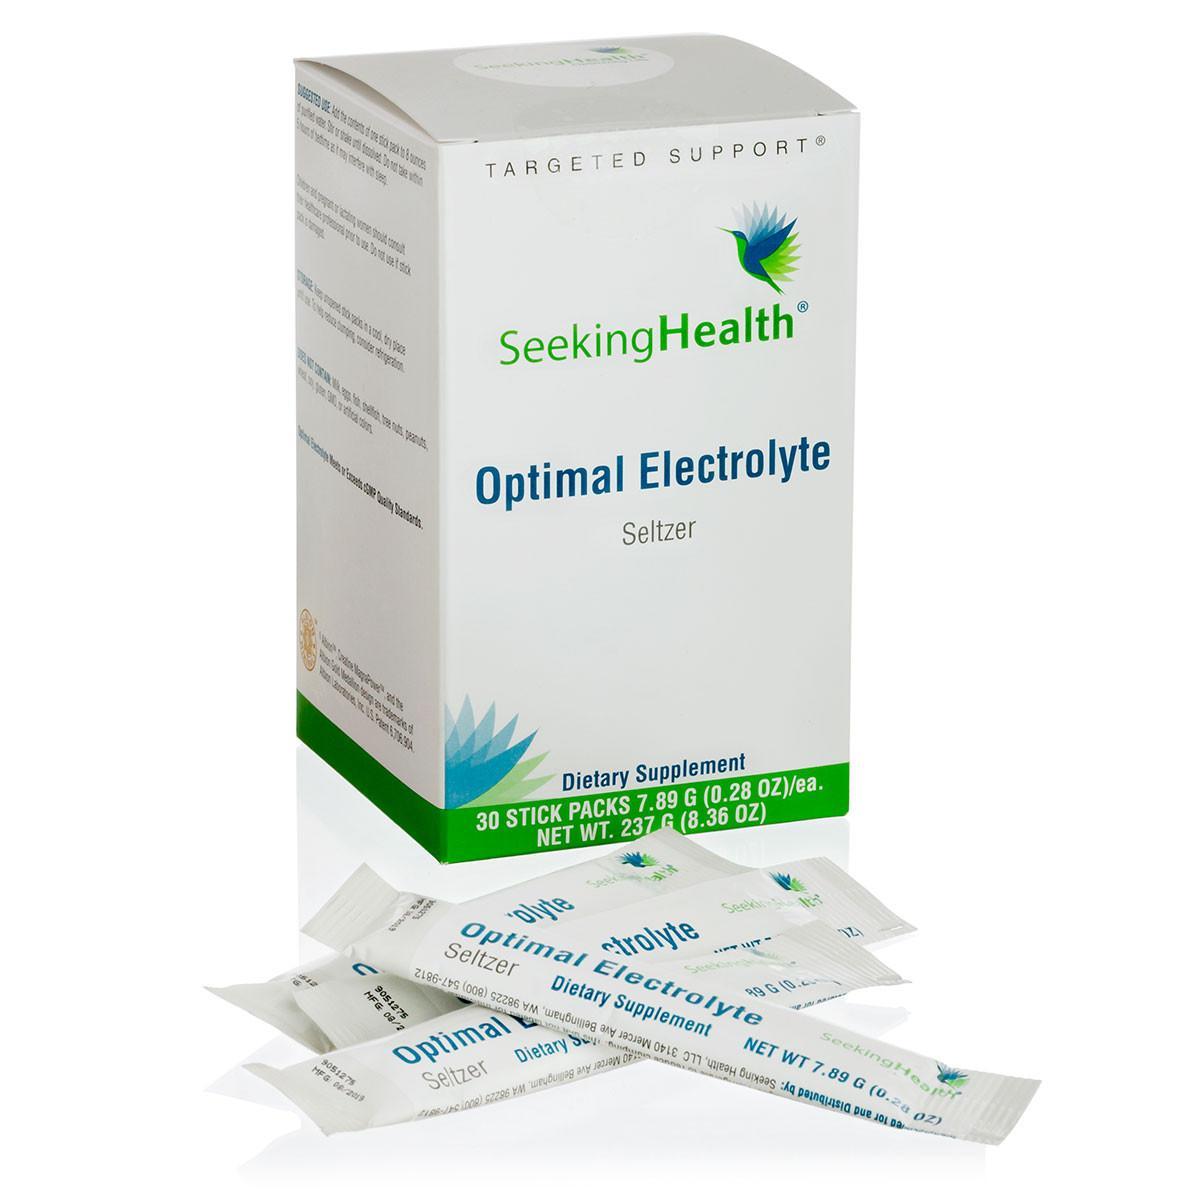 Optimal Electrolyte Seltzer stick packs plain from Seeking Health